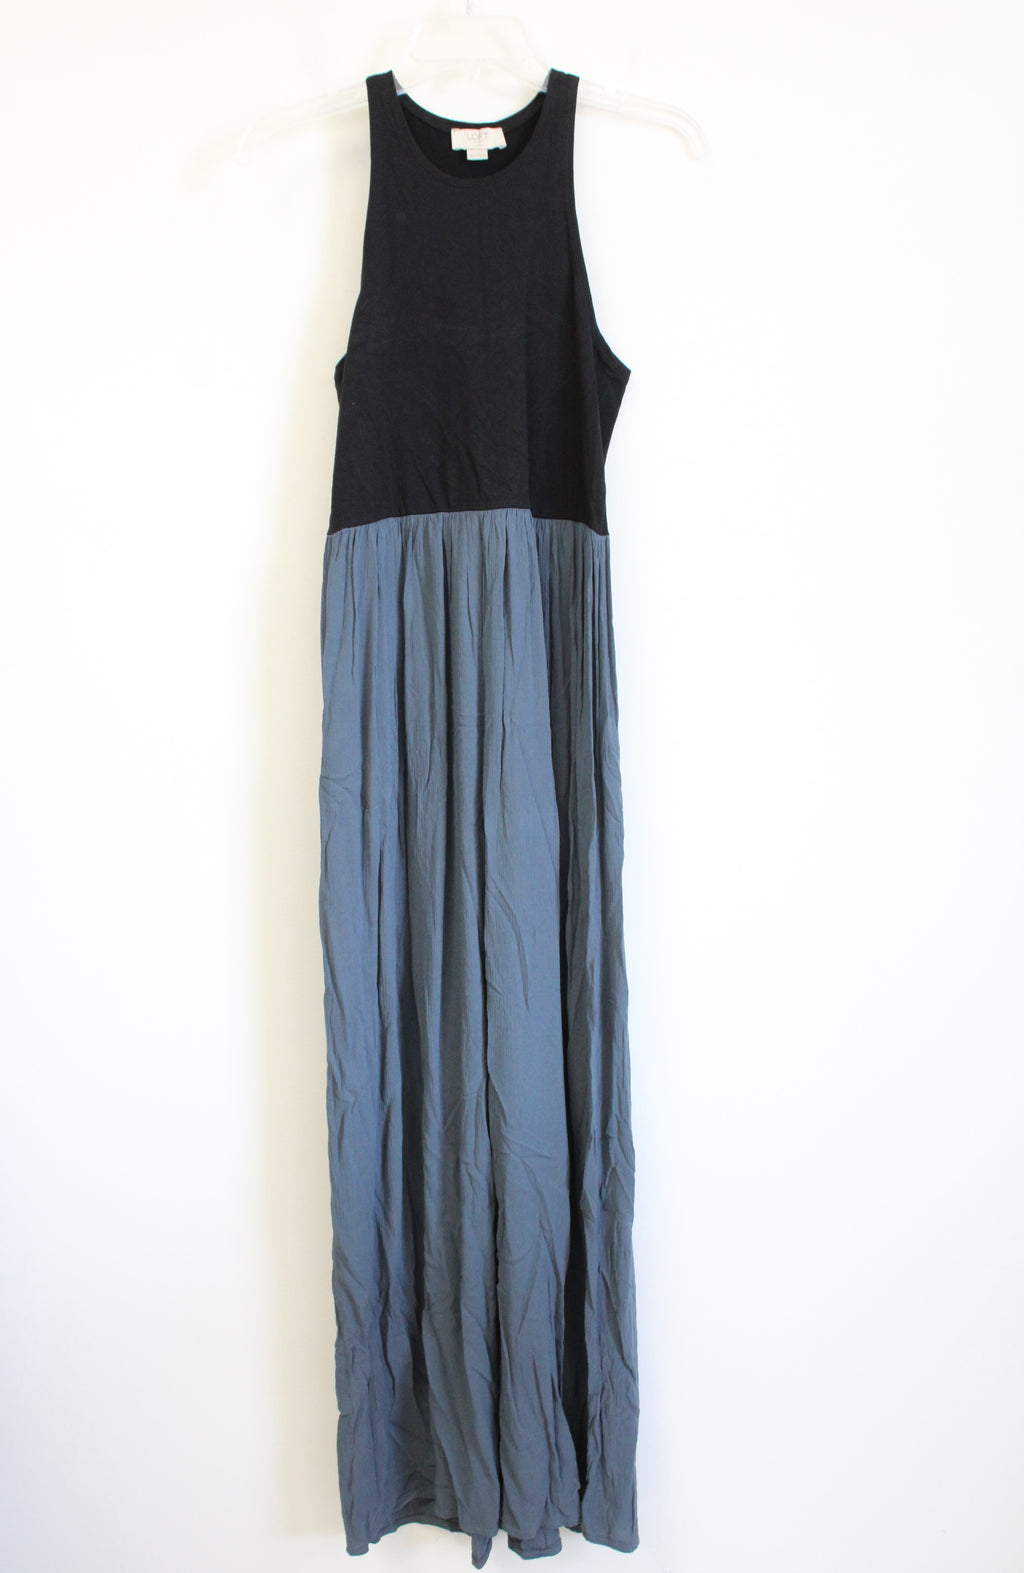 LOFT Black Blue Maxi Dress | XS/S Petite